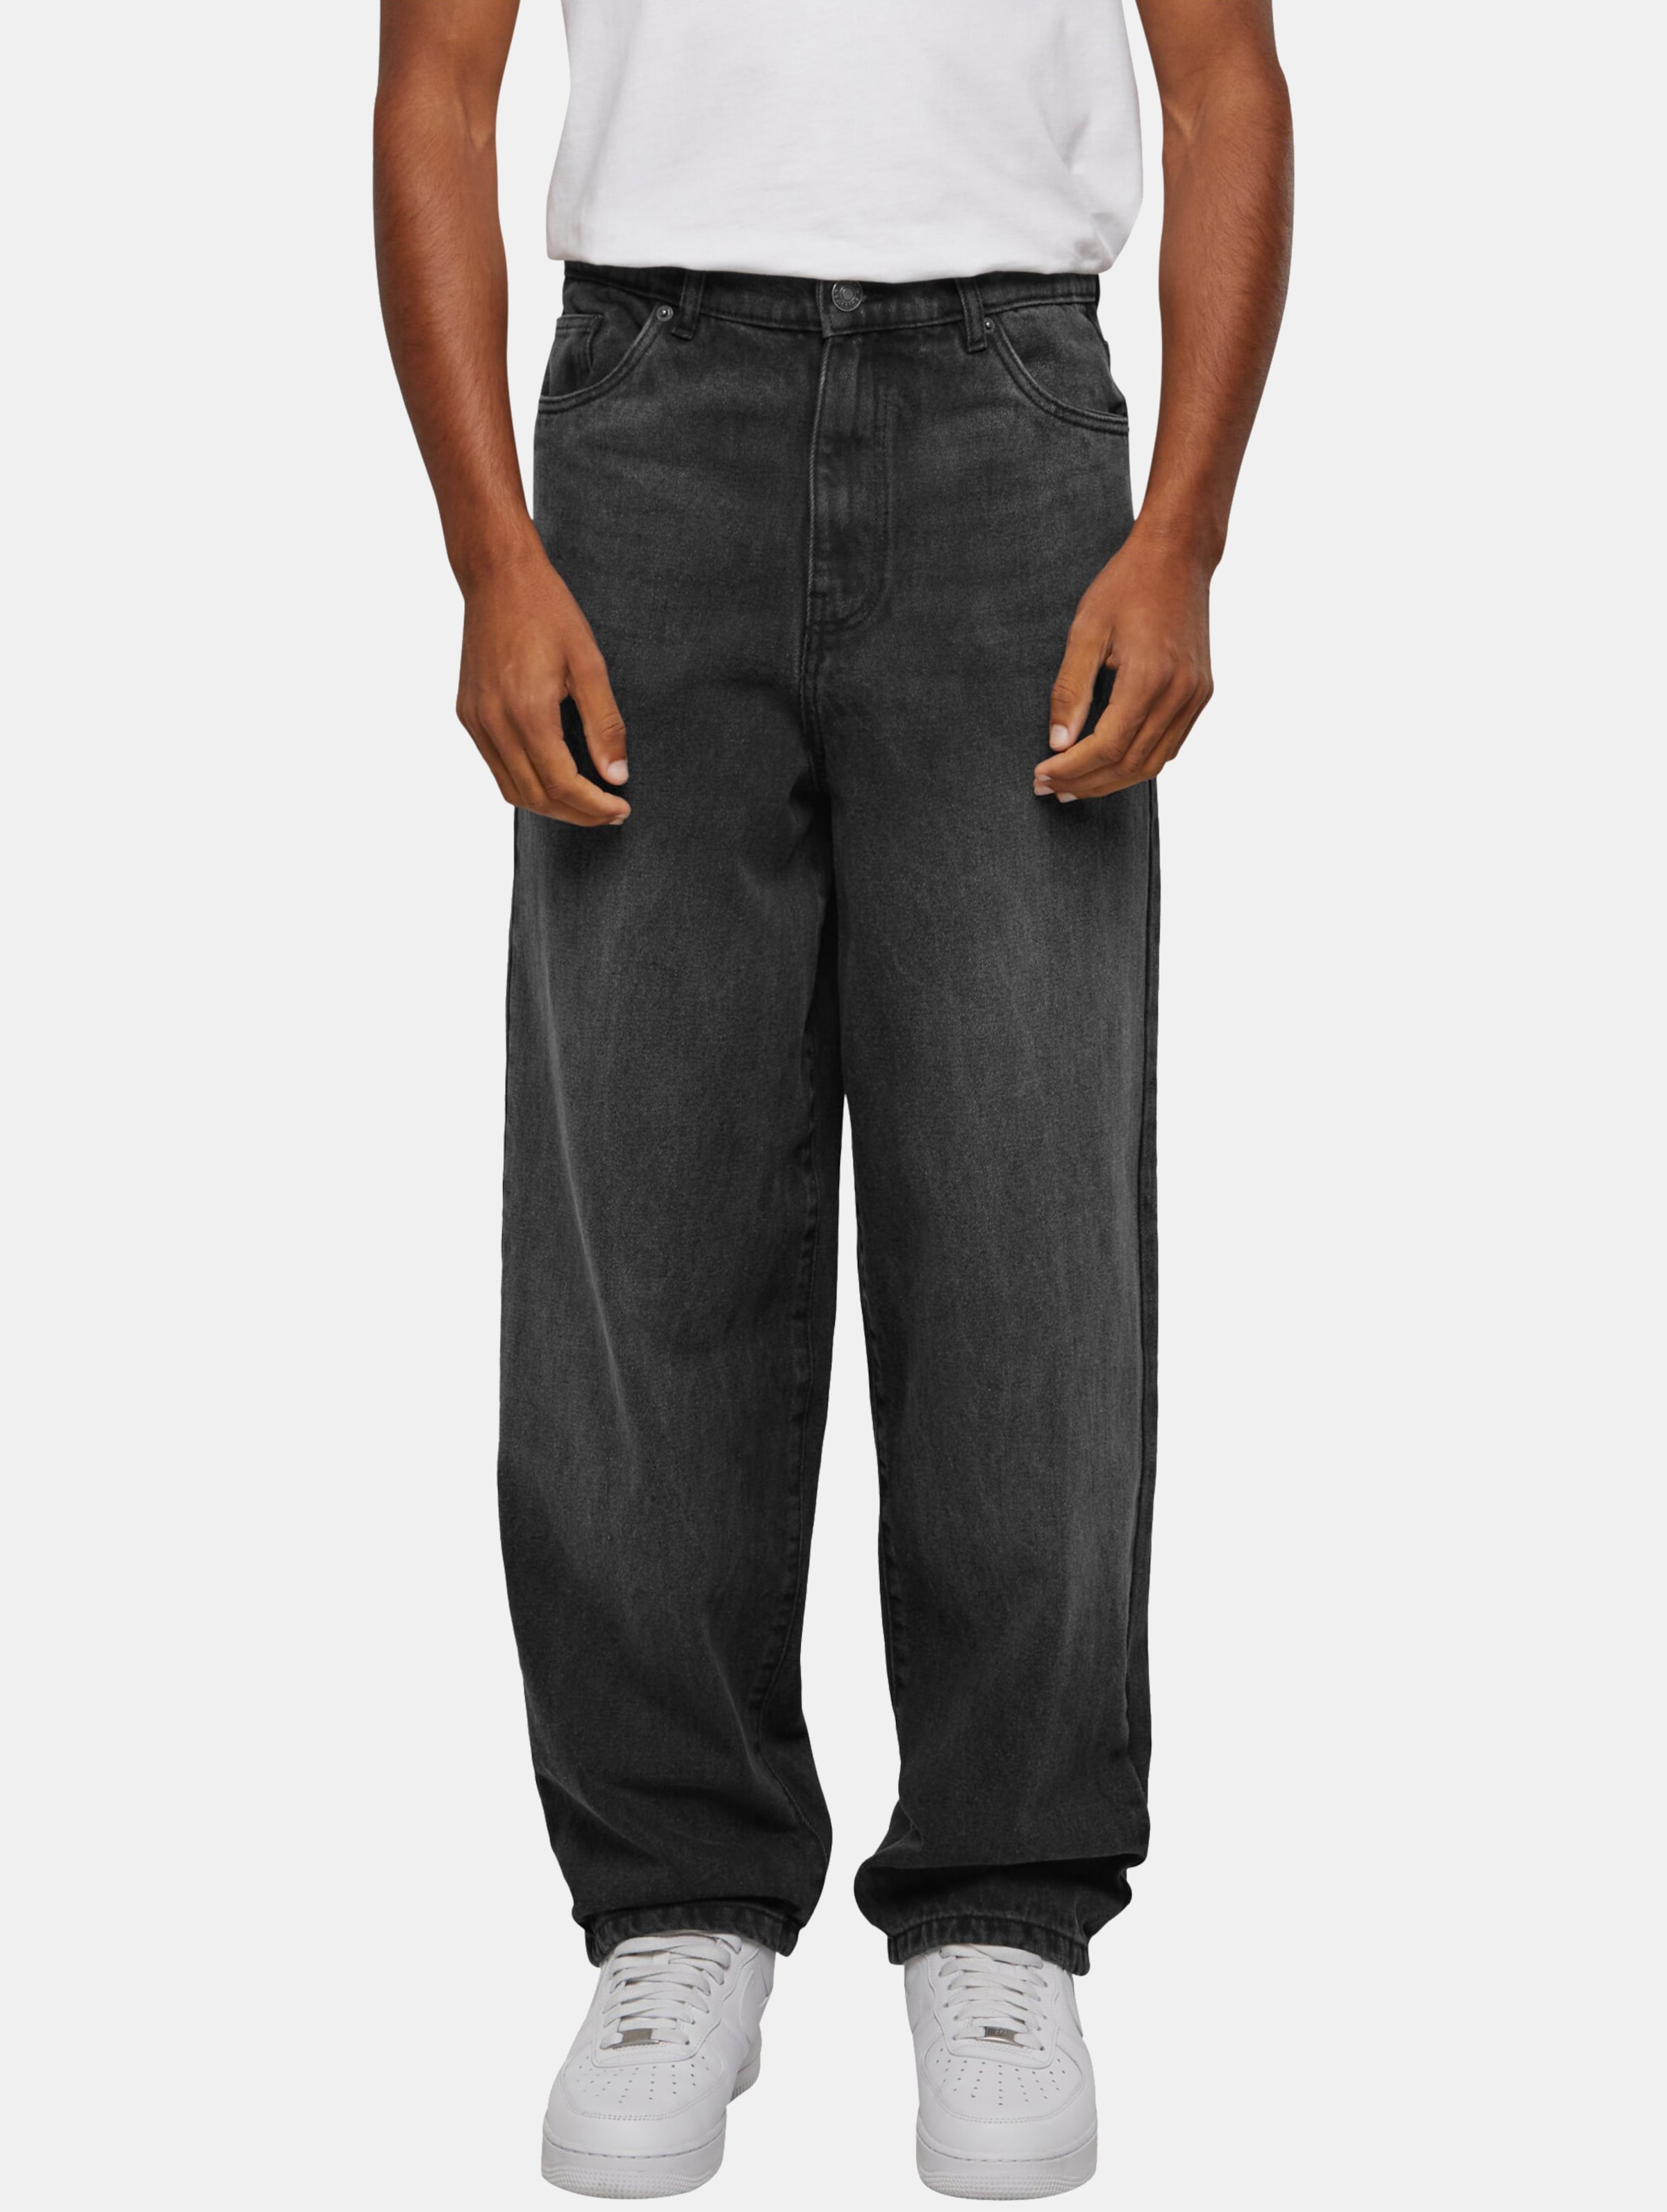 Urban Classics - Heavy Ounce Baggy Fit Jeans Wijde broek - Taille, 30 inch - Zwart